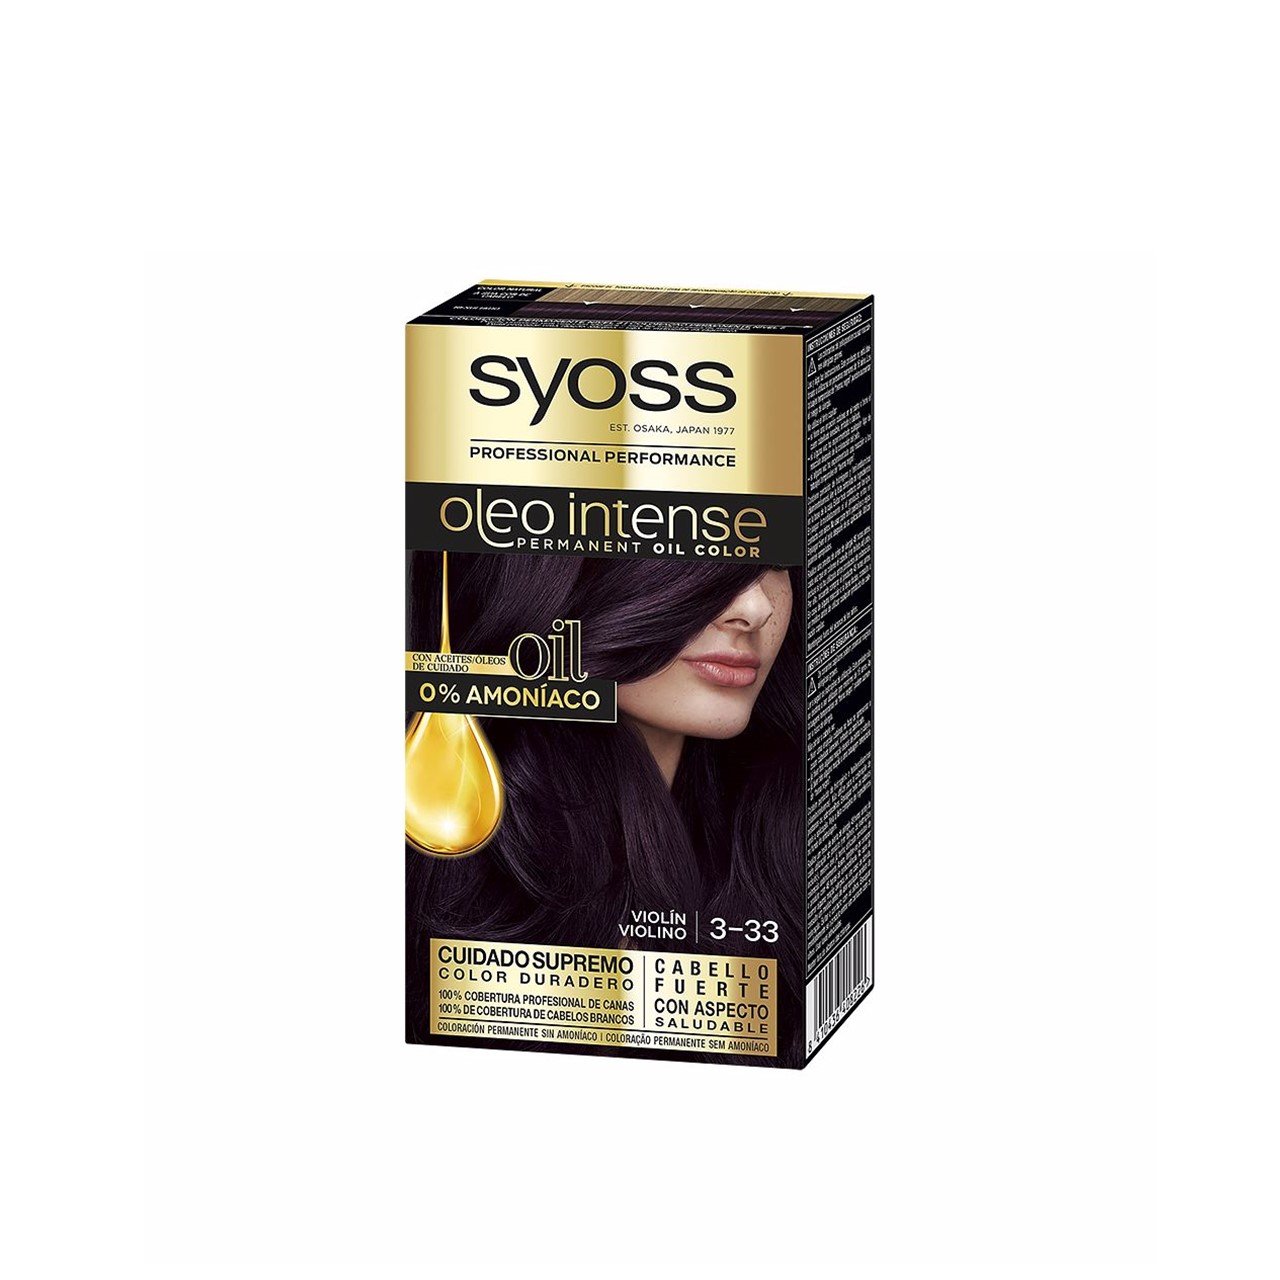 Syoss Oleo Intense Permanent Oil Color 3-33 Rich Plum Permanent Hair Dye